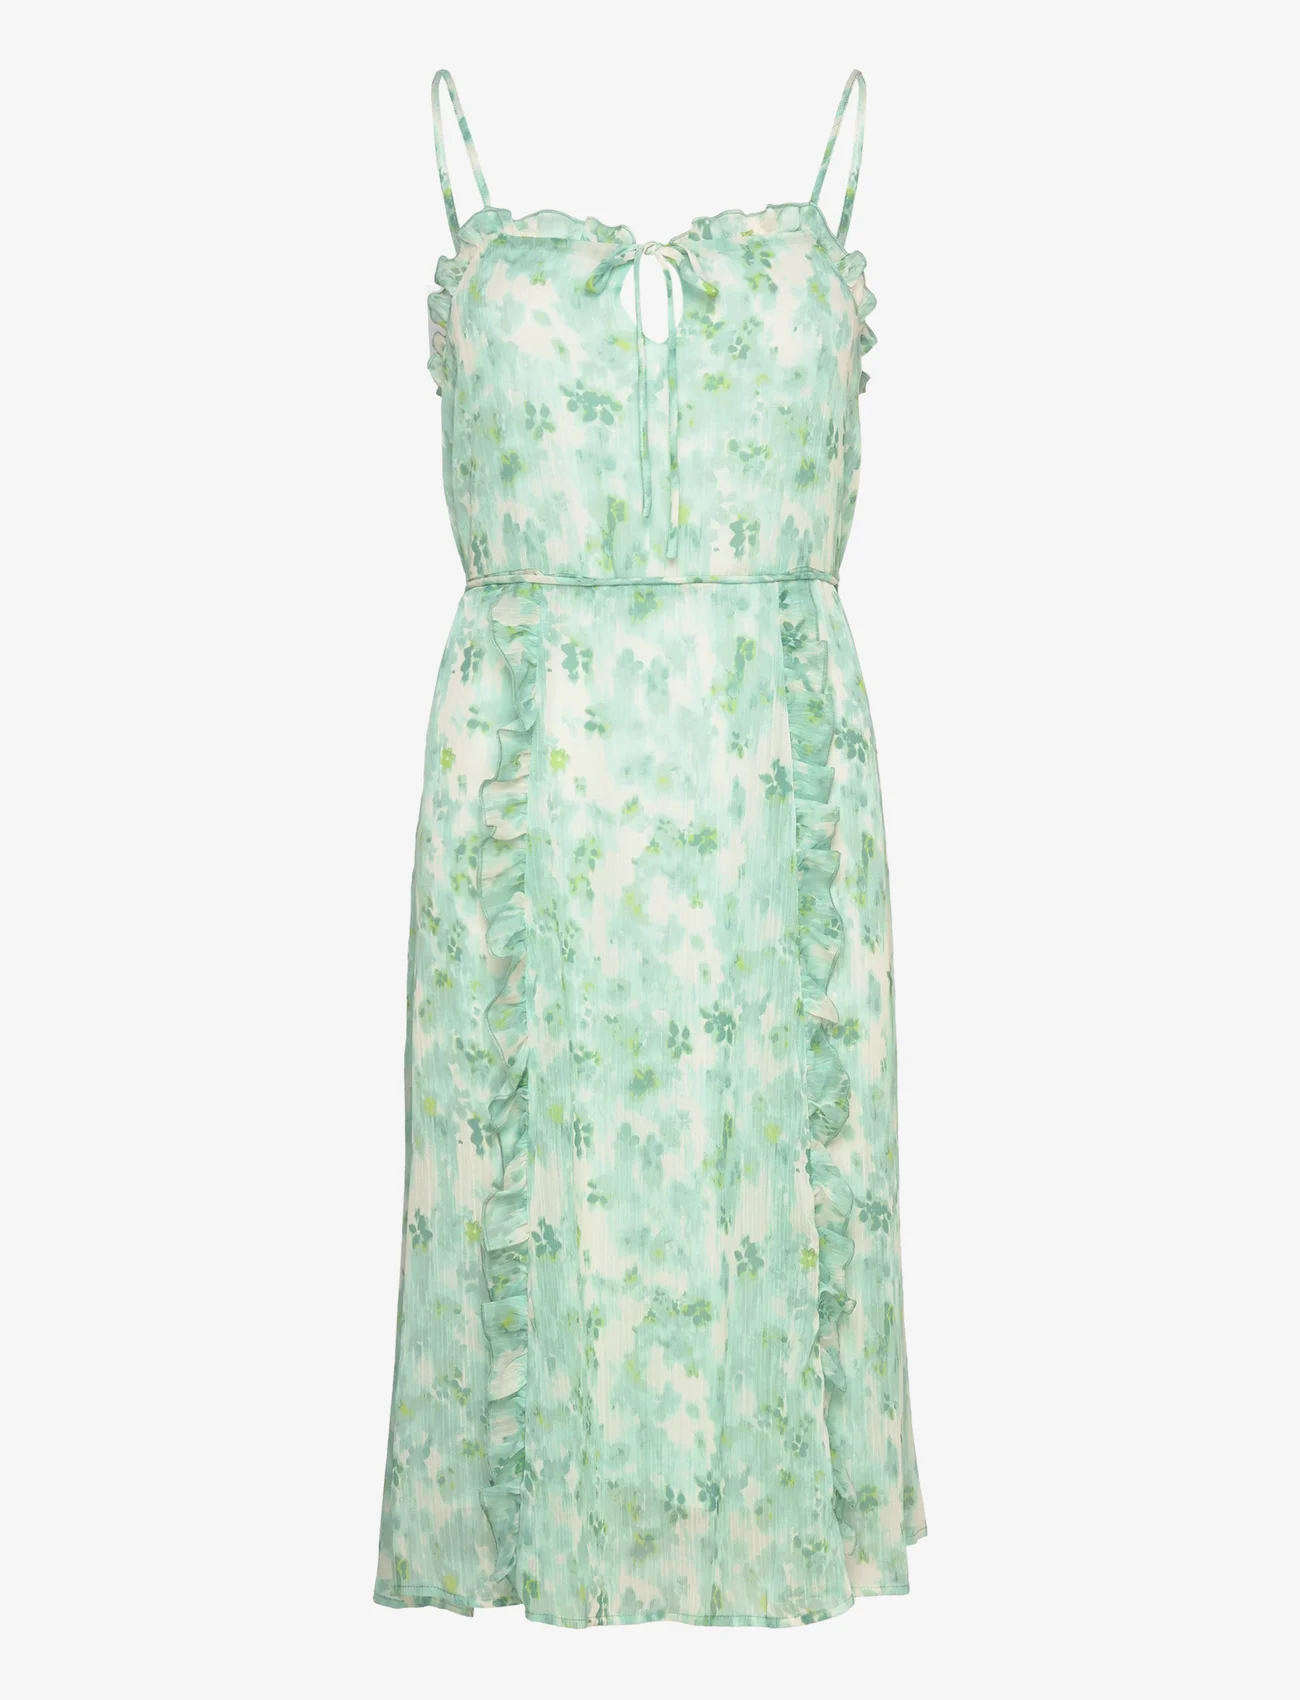 Rosemunde - Recycled chiffon strap dress - slip dresses - big mint flower print - 0